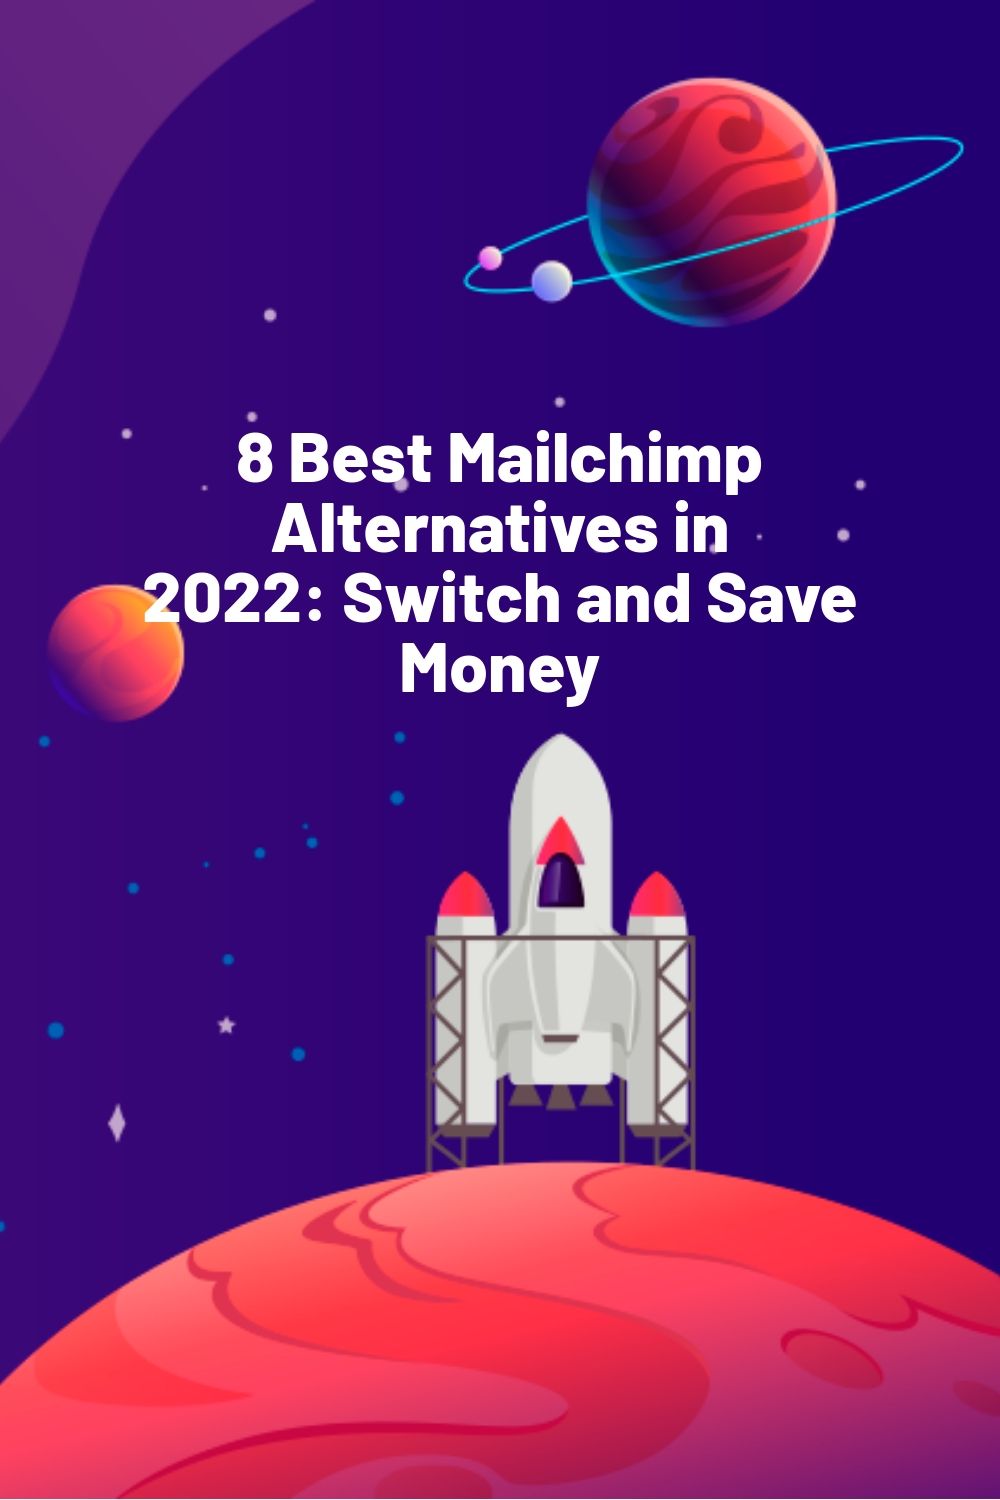 8 Best Mailchimp Alternatives in 2022: Switch and Save Money